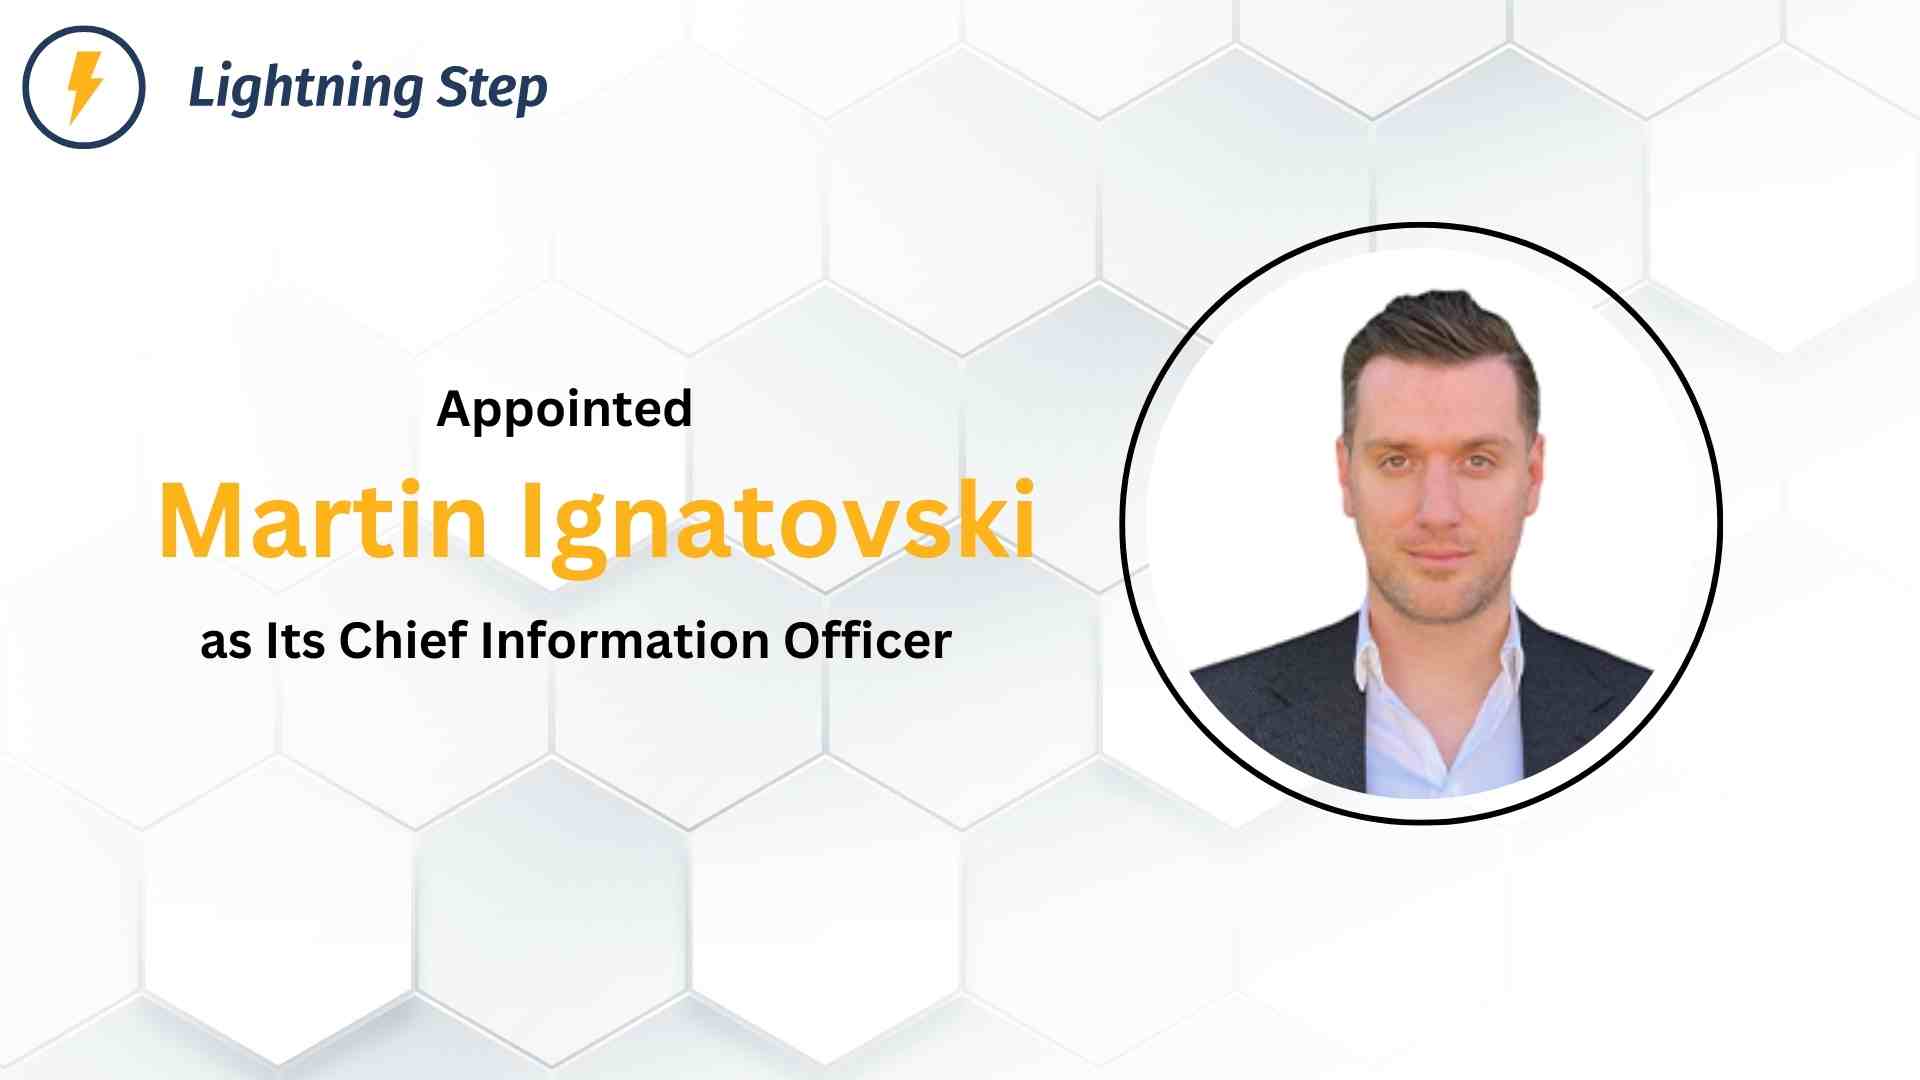 Lightning Step Names Healthcare IT Veteran Martin Ignatovski as New Chief Information Officer